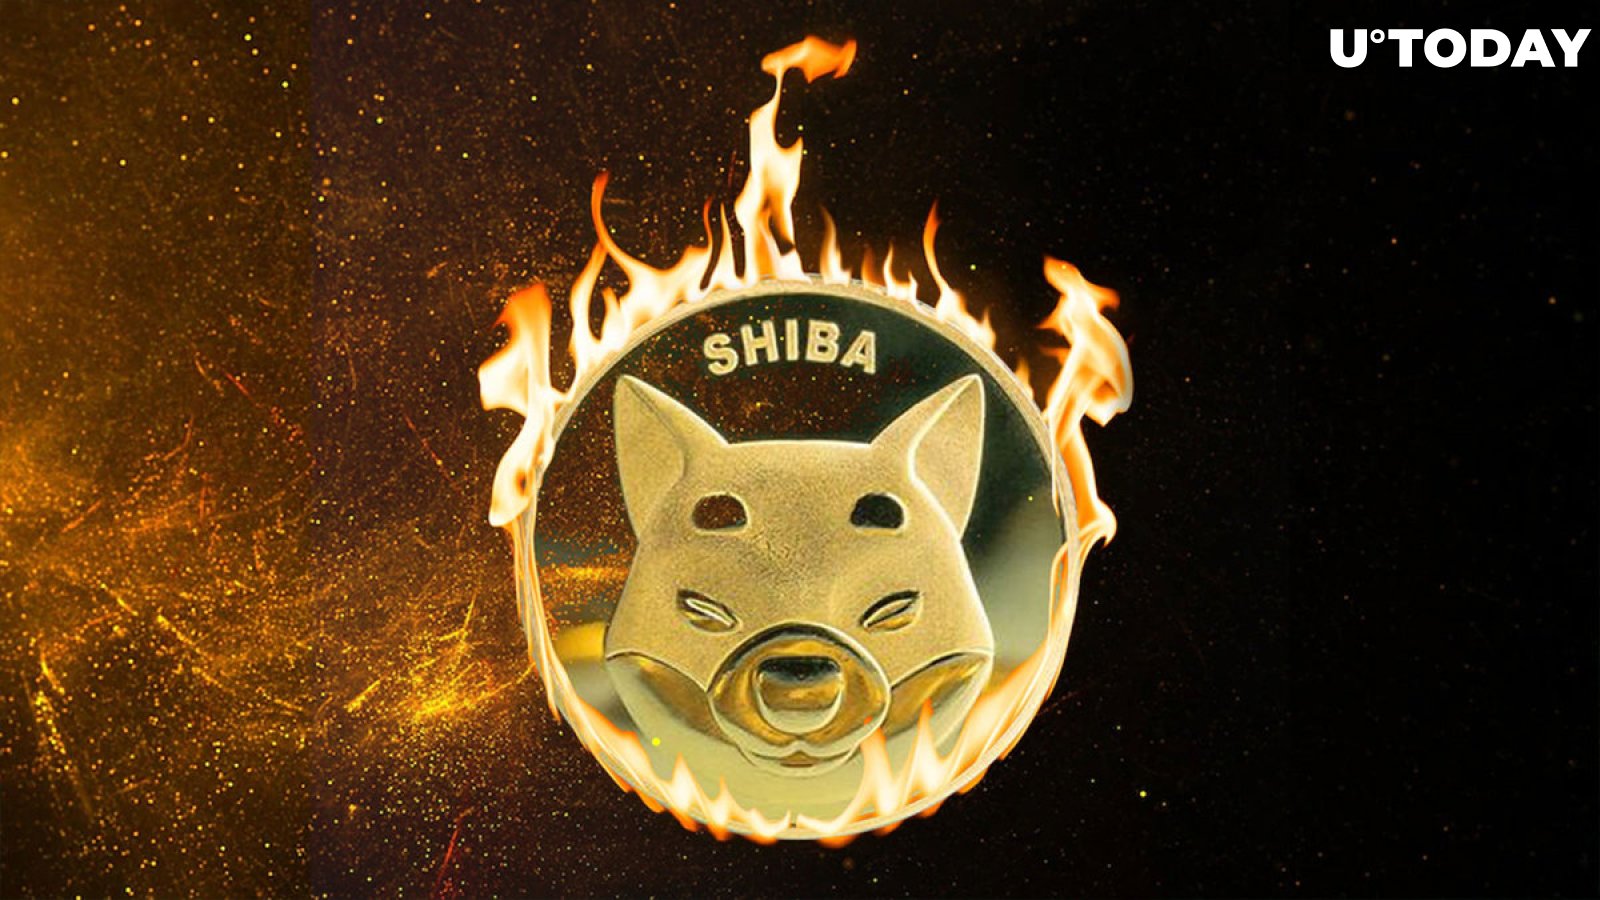 Shiba Inu Burn Address Used by Vitalik Buterin Now Reaches 410 Trillion Burned SHIB